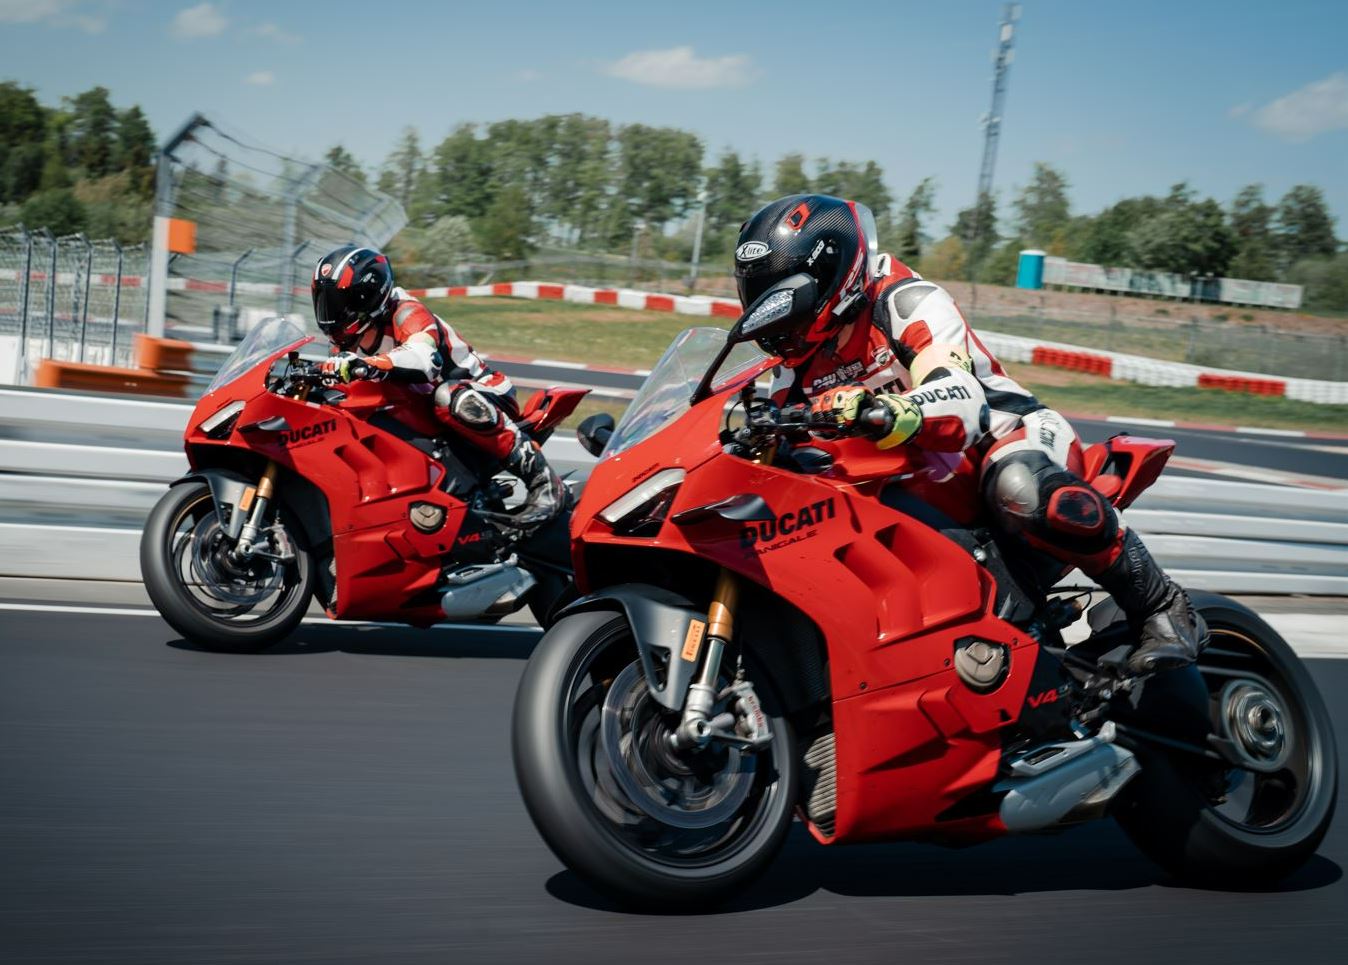 Ducati Rennstreckentraining im Rahmen der Ducati For You 2023